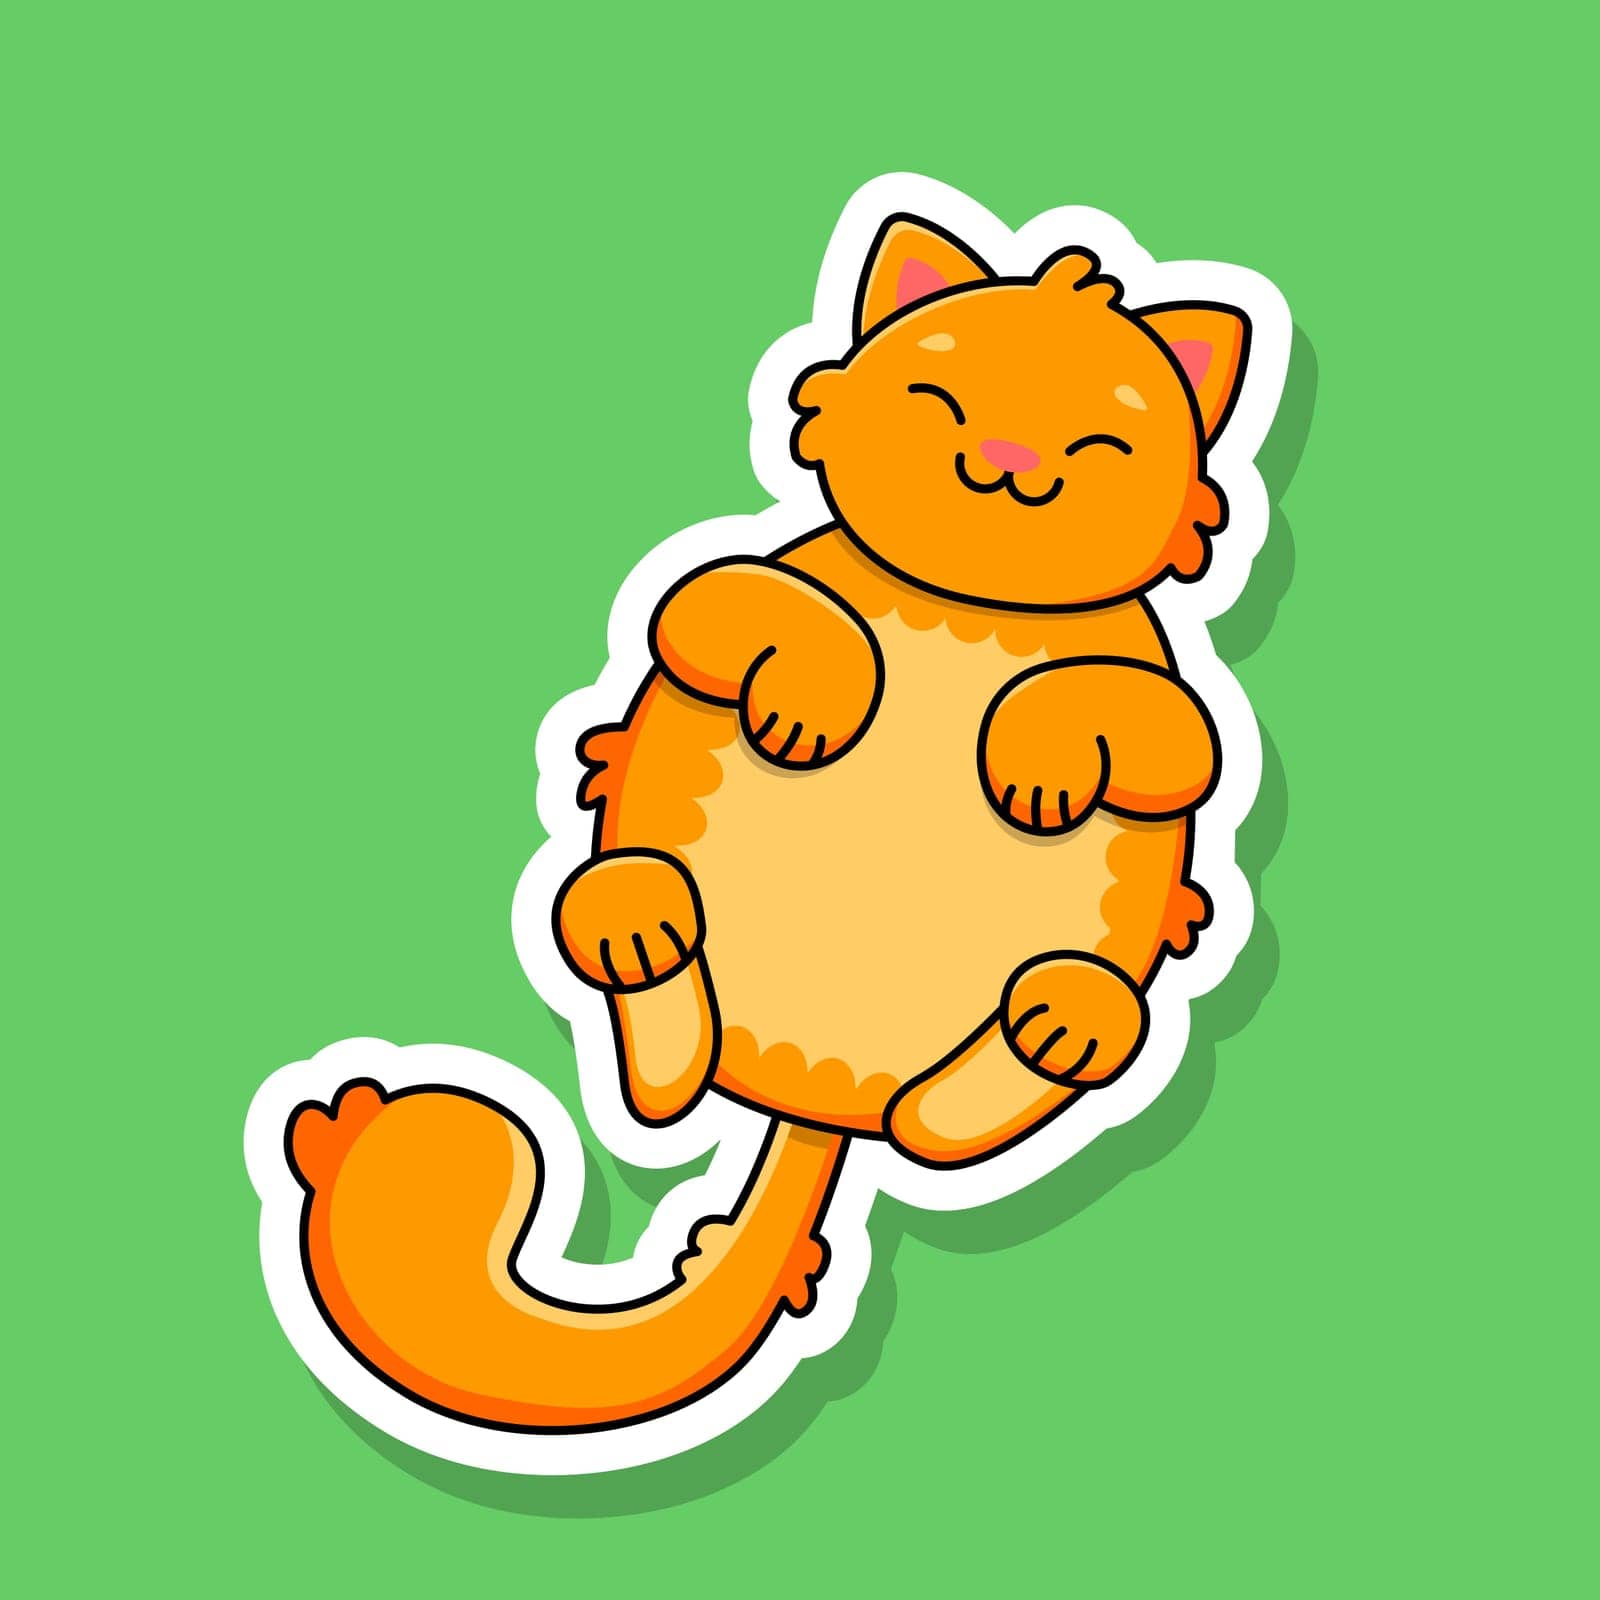 Sticker of a sleeping smiling ginger cat. Vector illustration